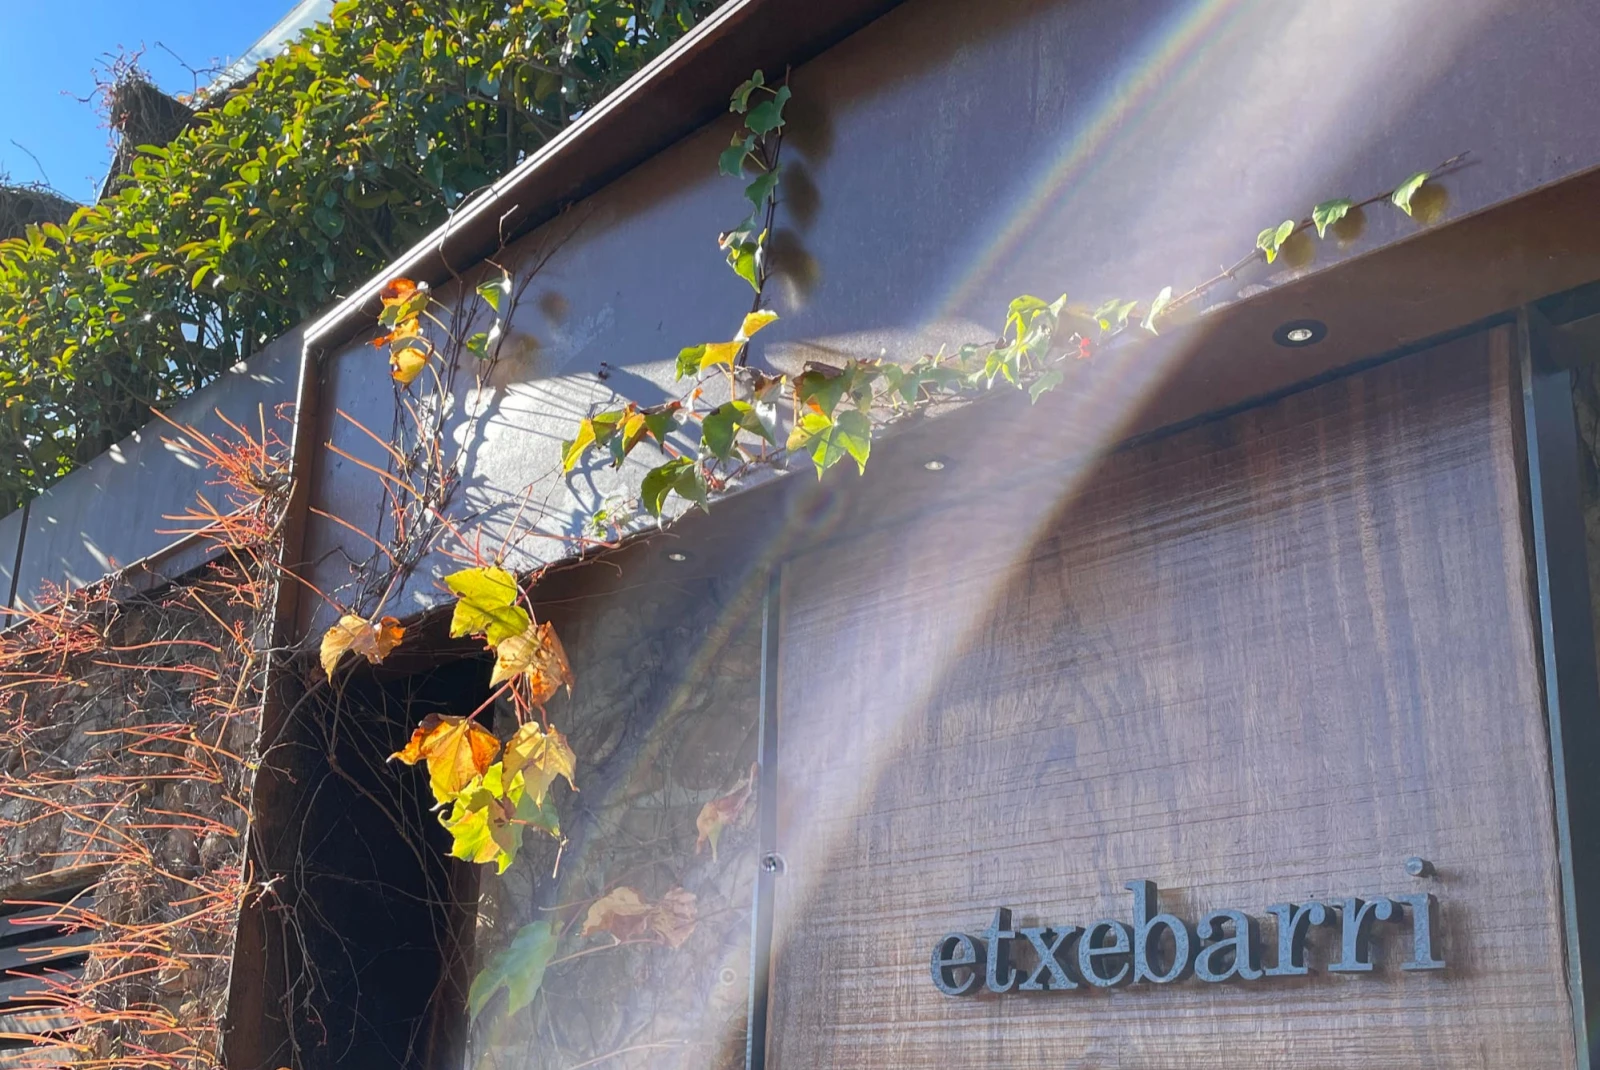 sun beam shines down over a wooden door entrance to a restaurant that reads, "etxebarri."